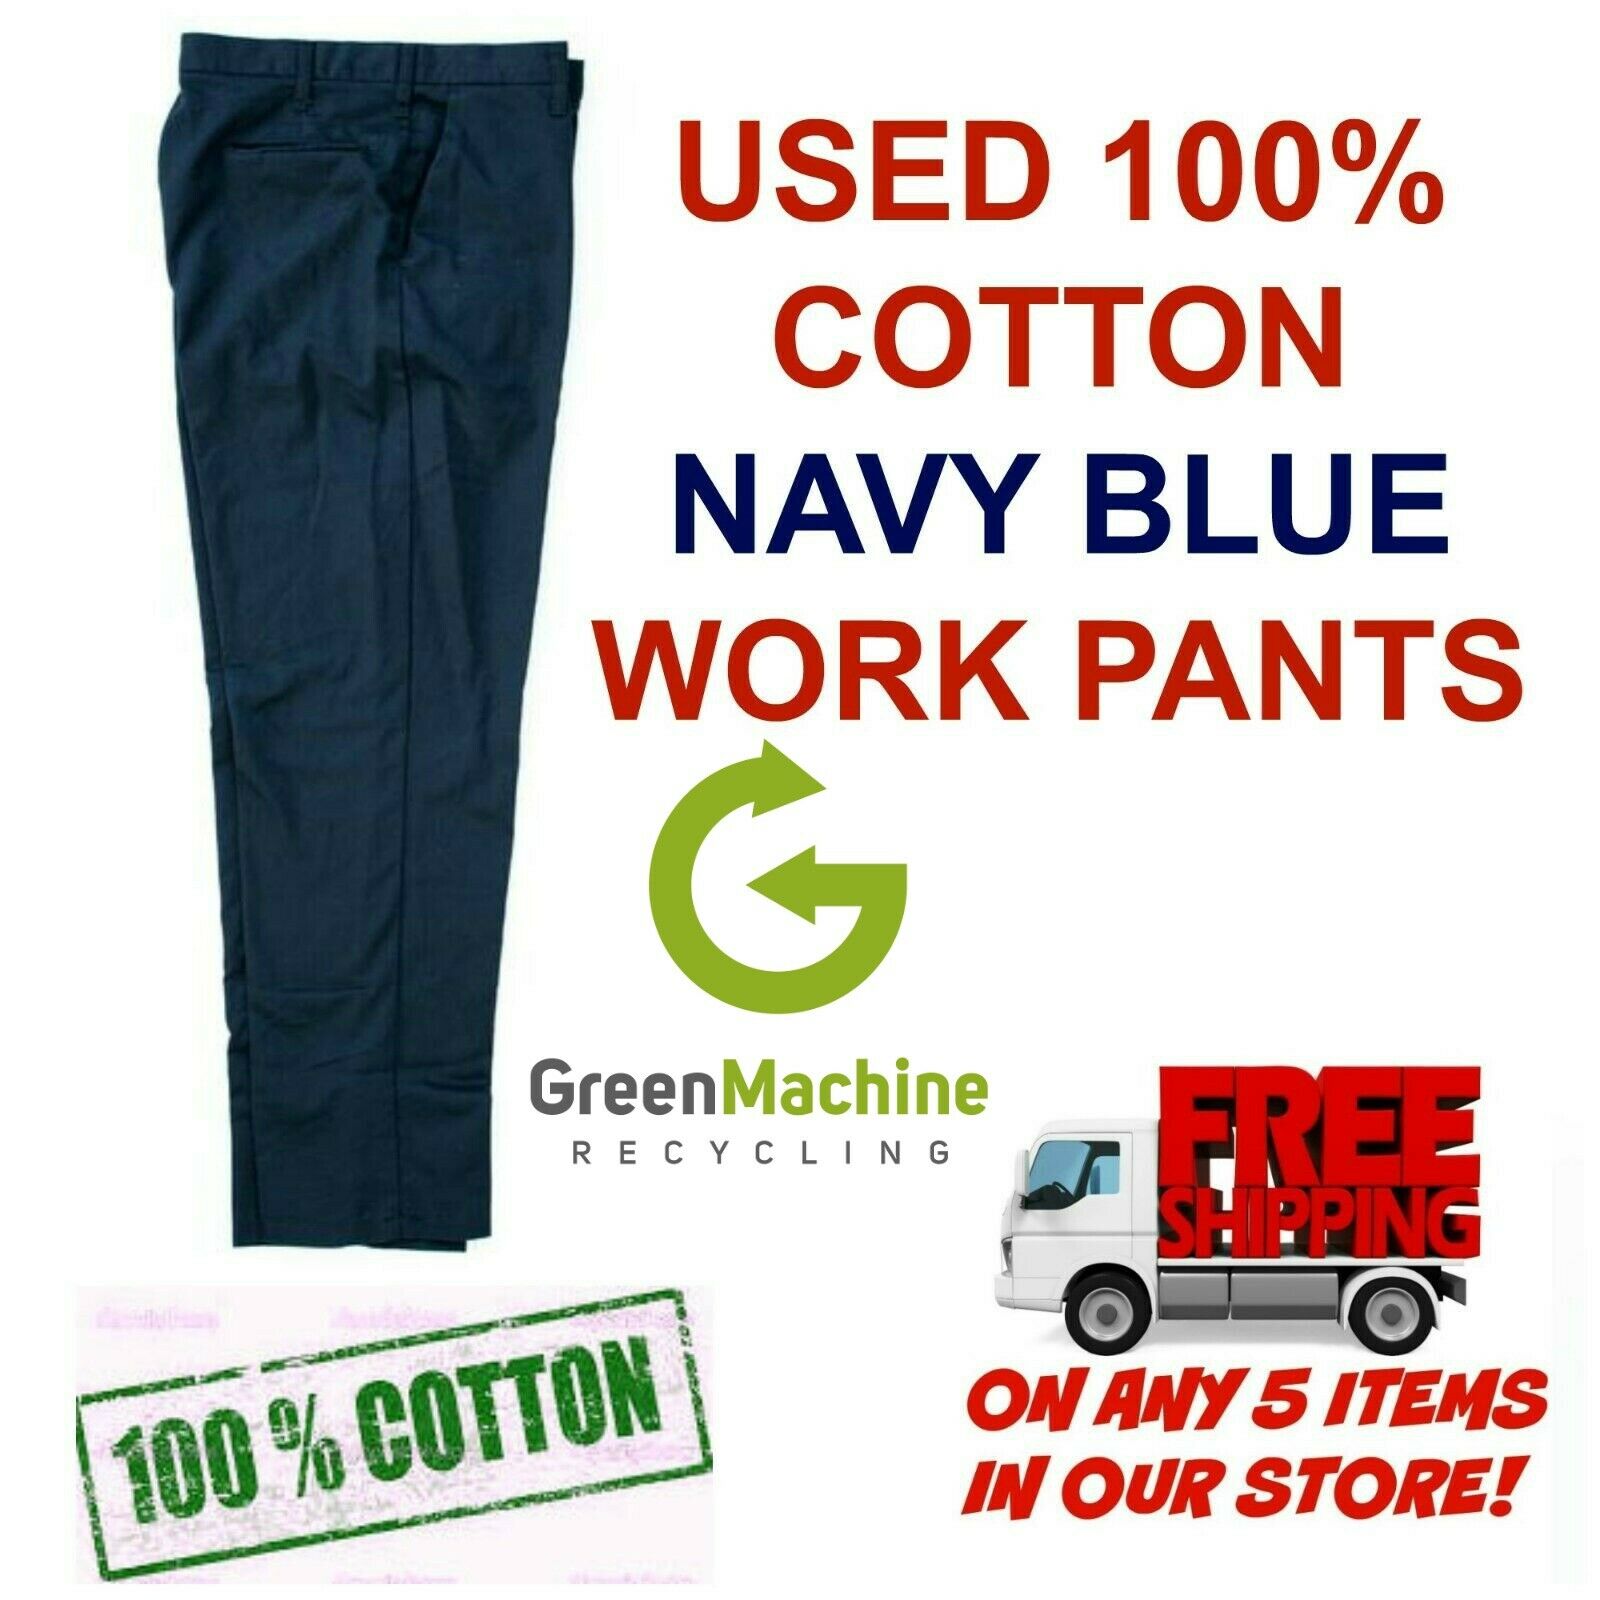 Used Uniform Work Pants 100% Cotton Cintas Redkap Unifirst G&k Dickies Etc